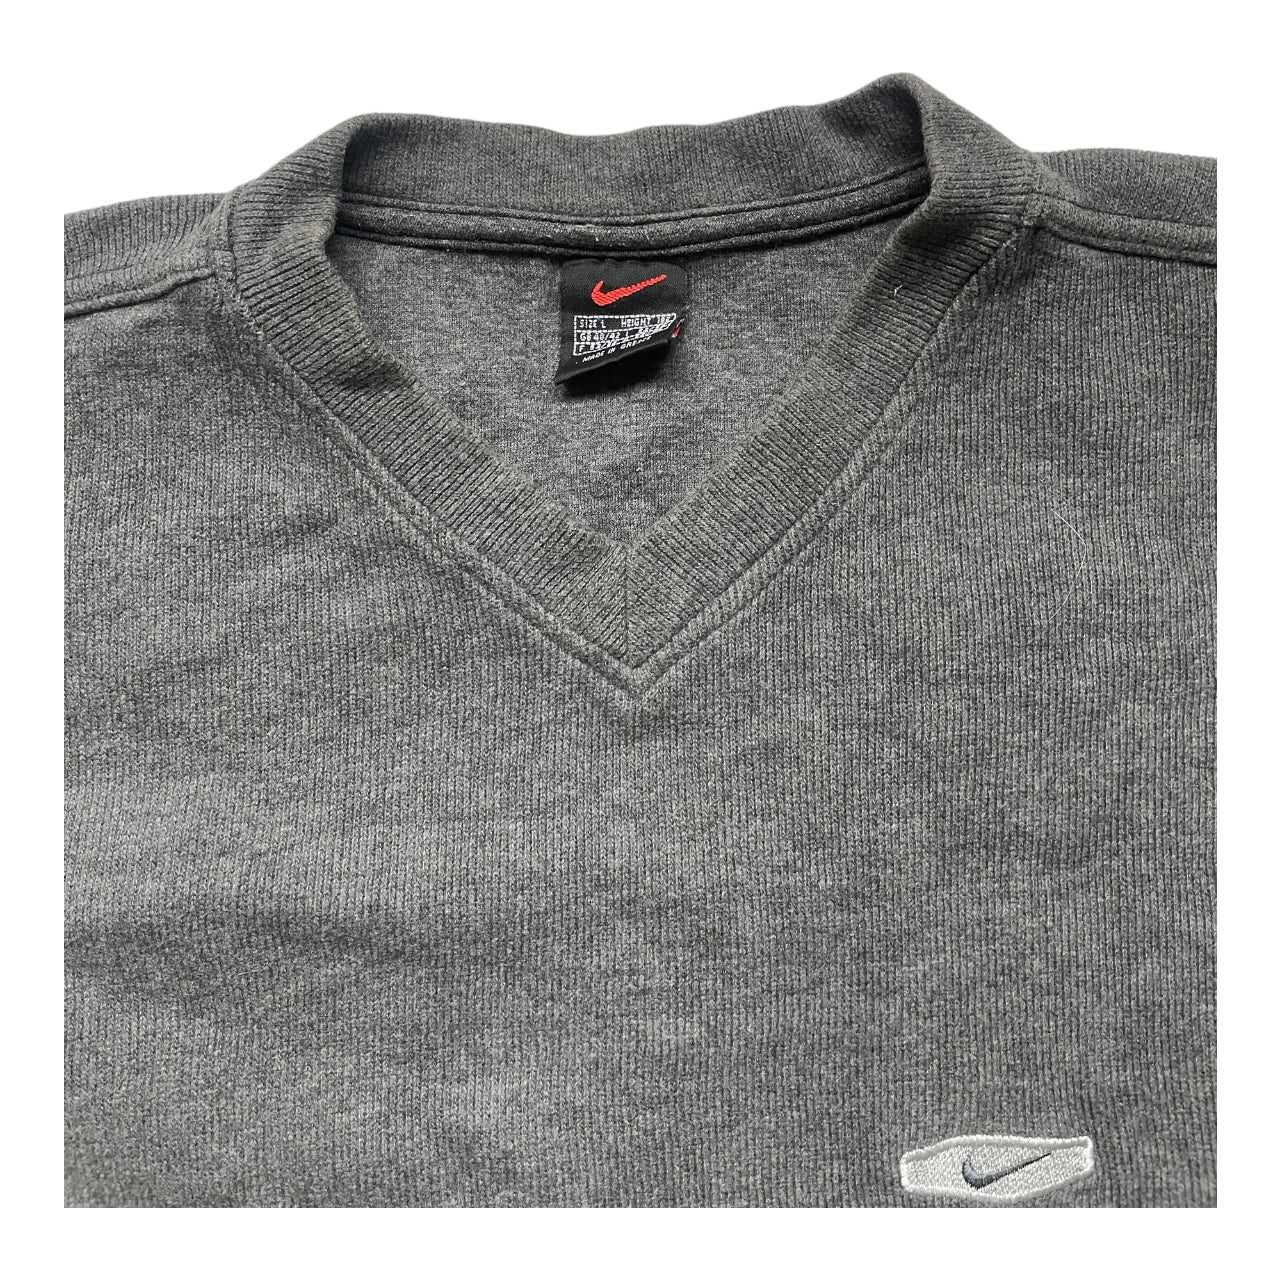 Nike Vintage Sweatshirt V Neck 90s L Size Grey A_34